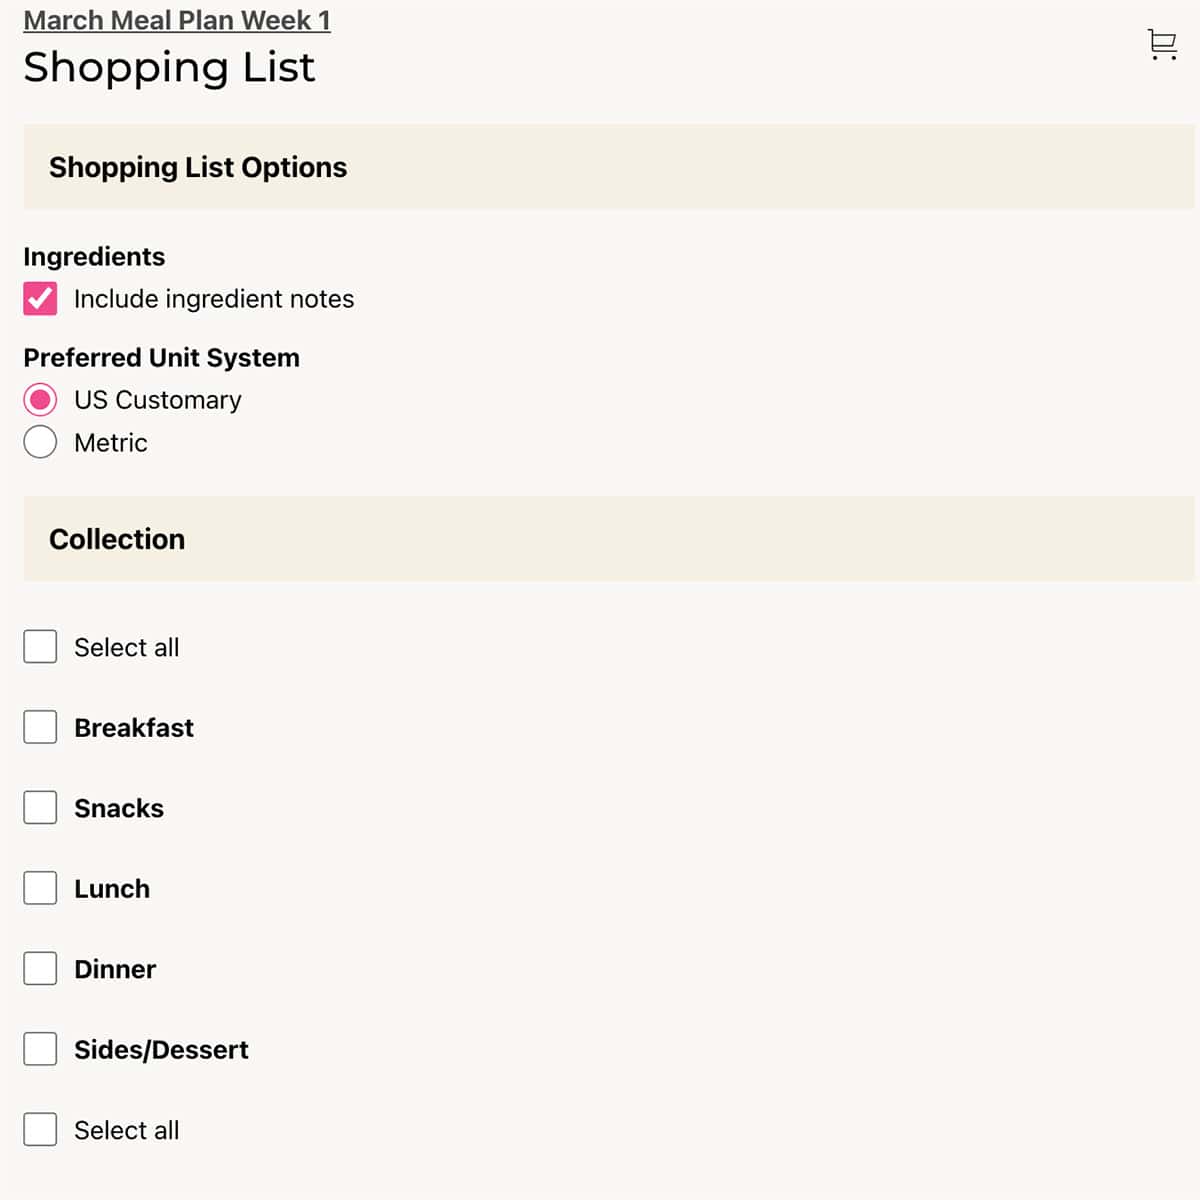 shopping list image 1